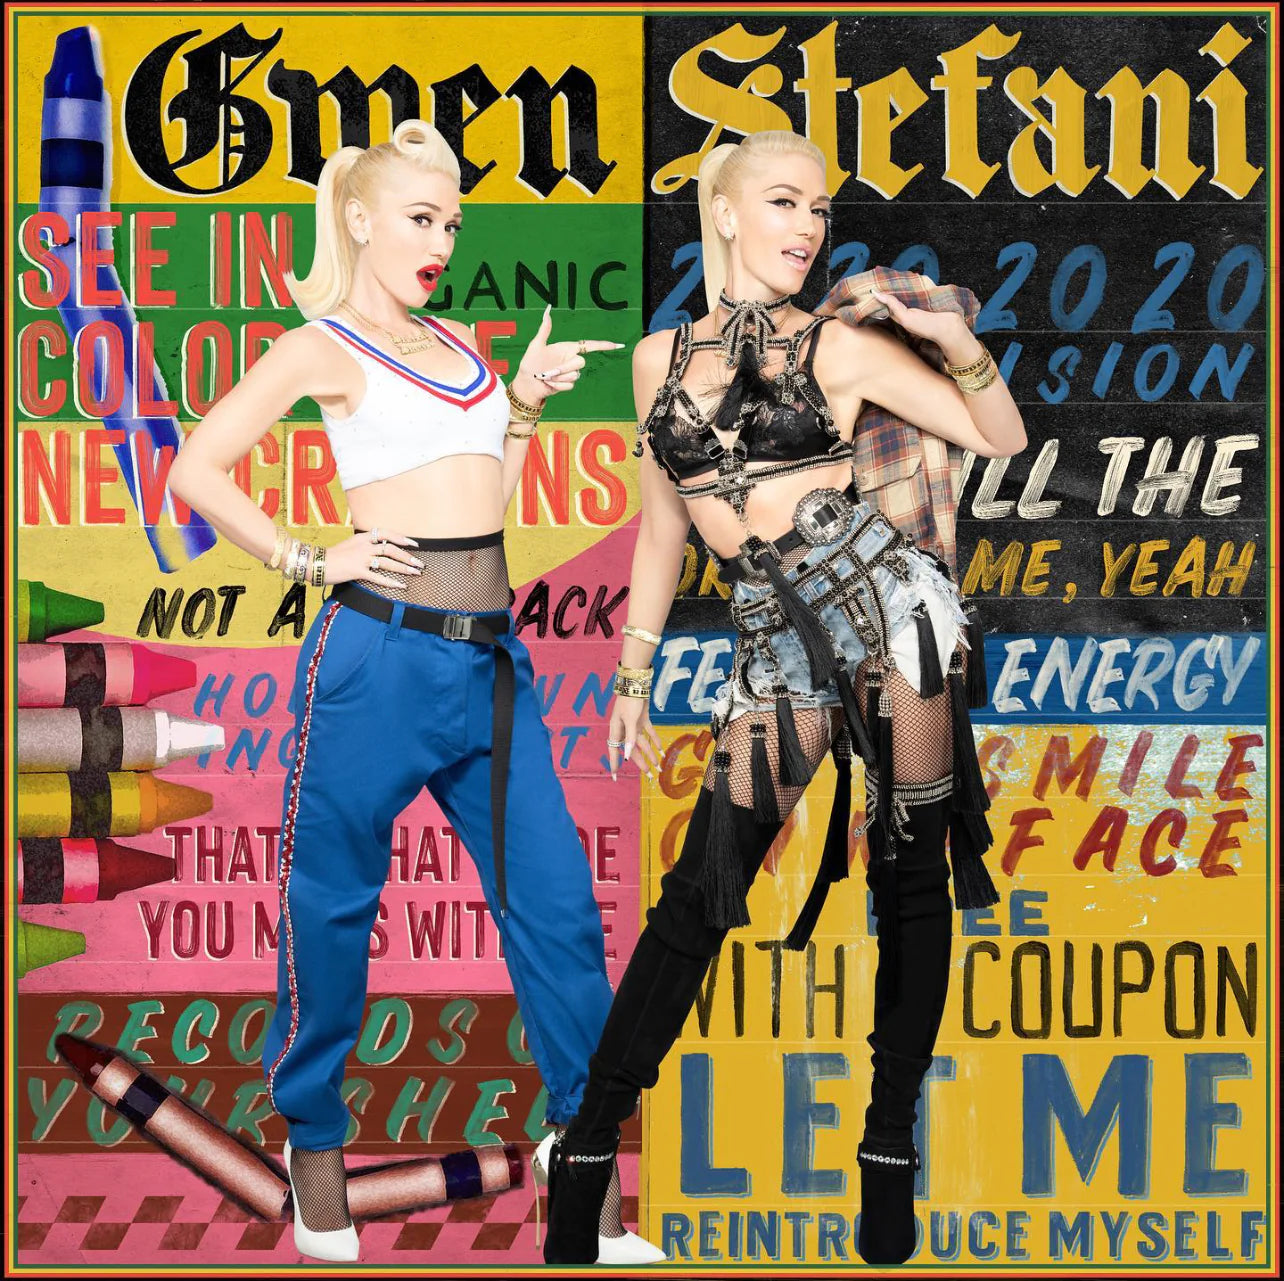 Gwen Stefani in Lacia I boots